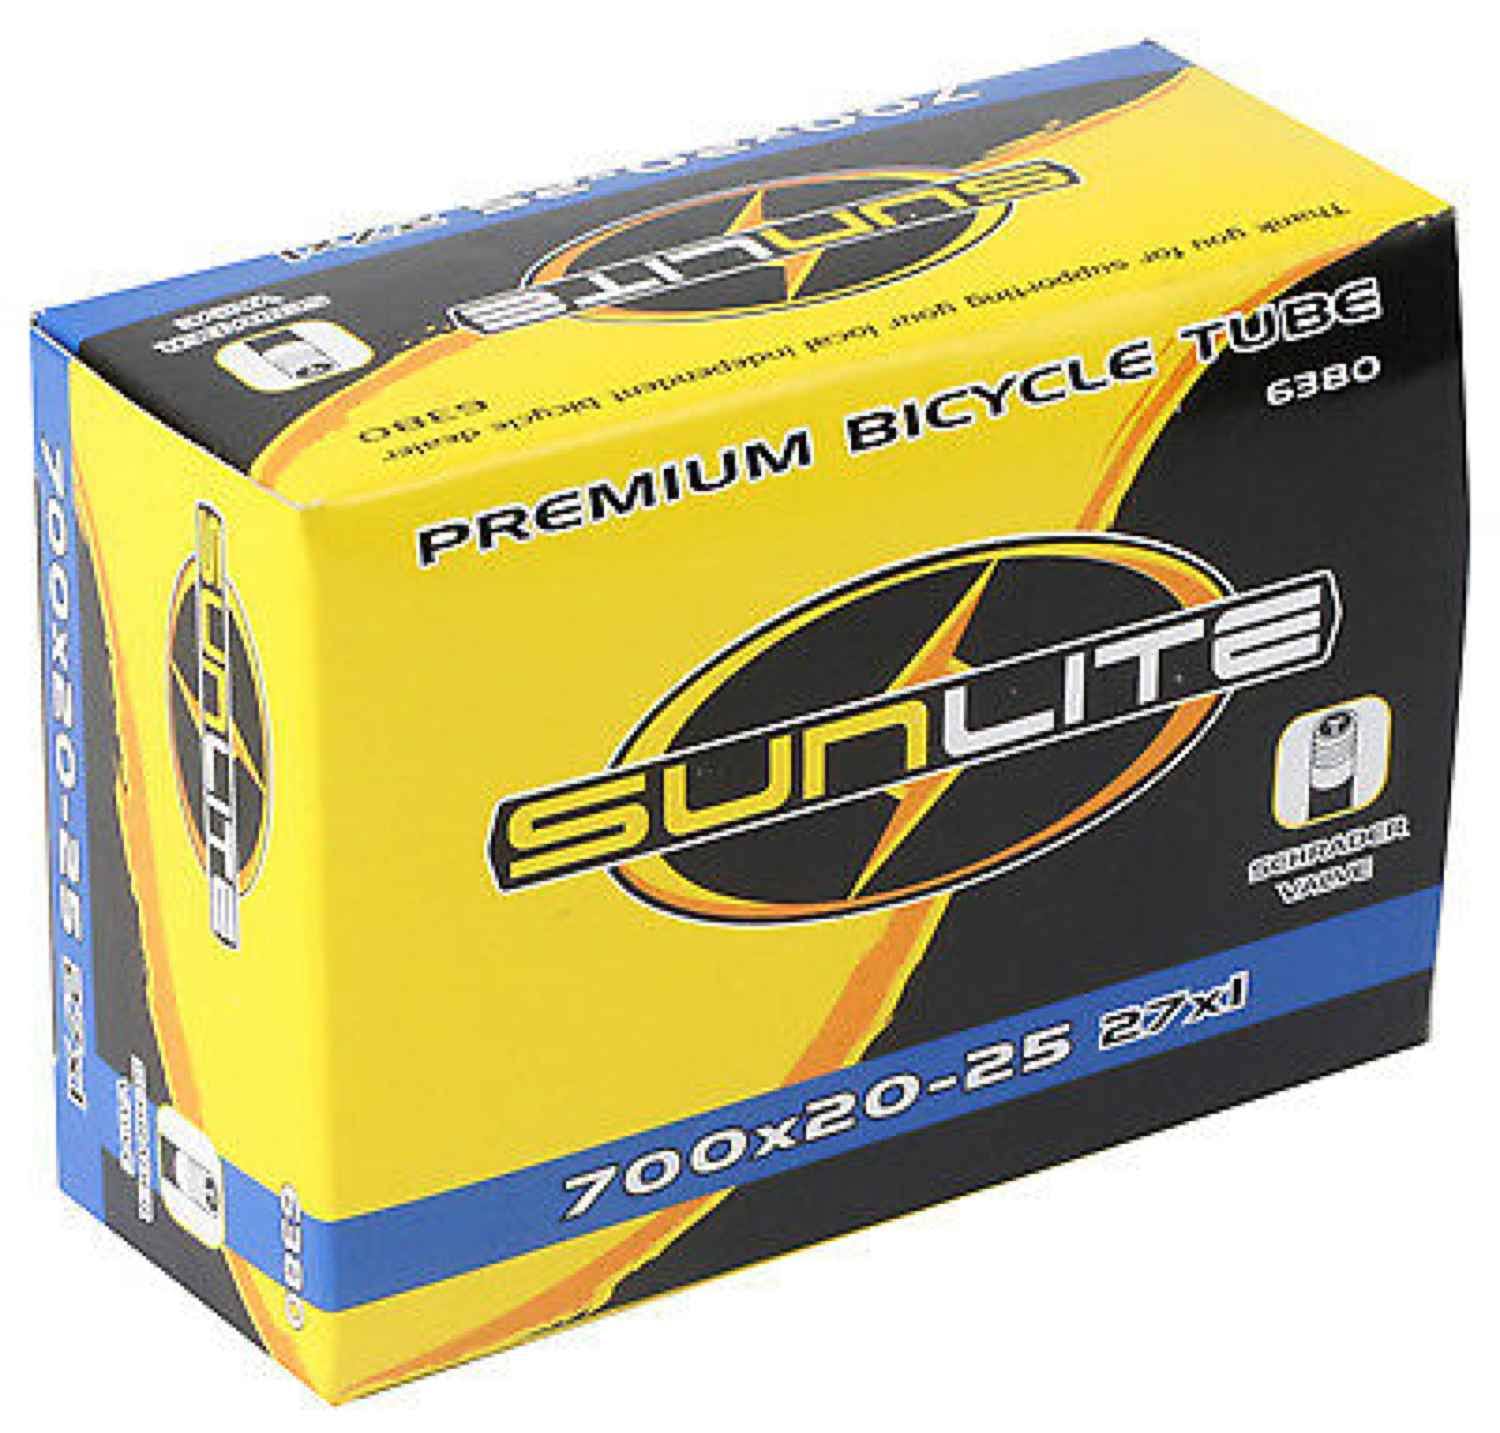 Sunlite Bicycle Inner Tube - 700x20-25, 32mm